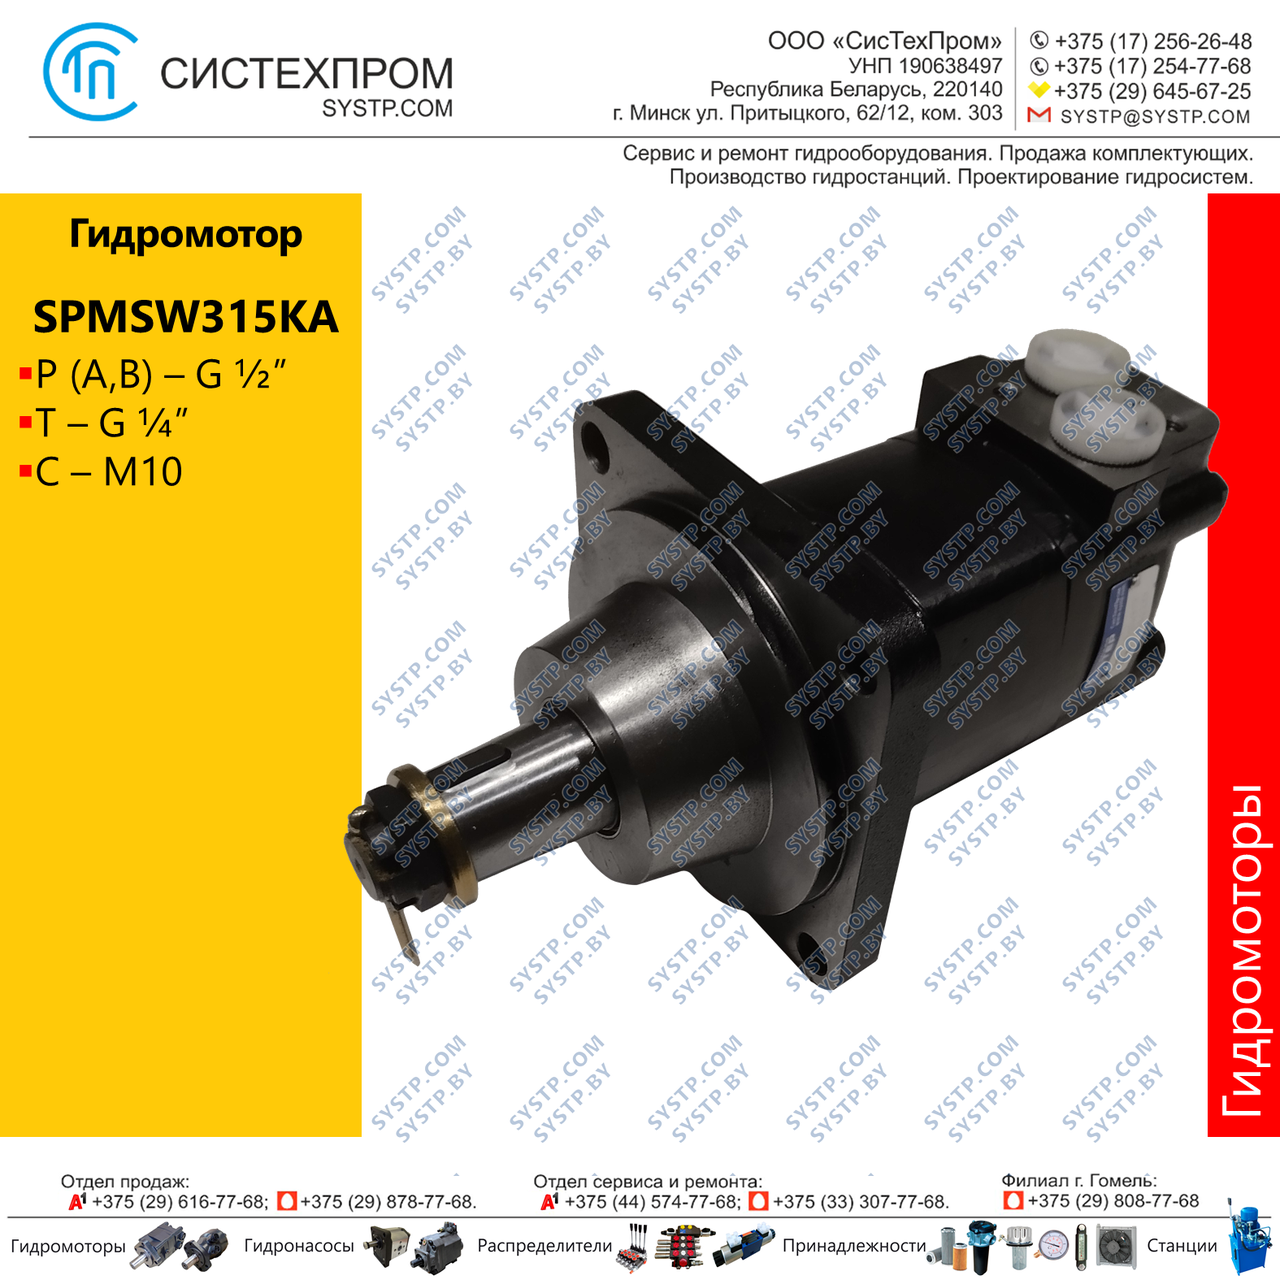 Гидромотор SPMSW315KA